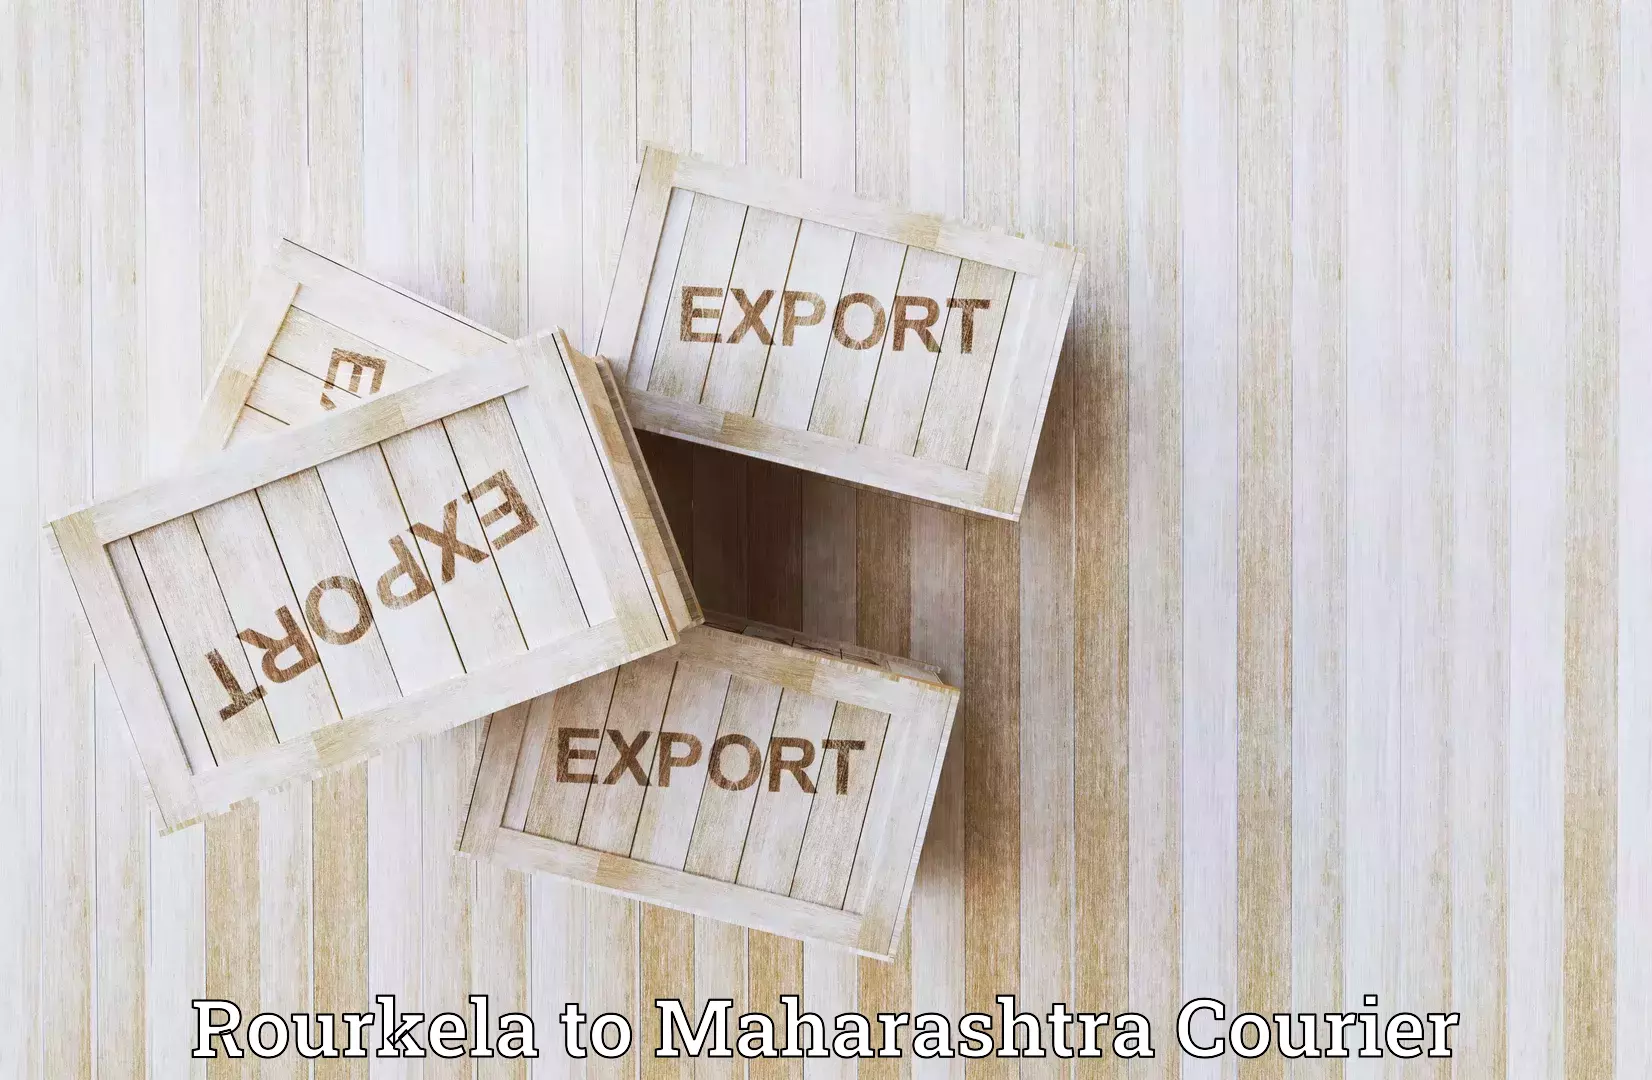 Courier service innovation Rourkela to Bhadravati Chandrapur